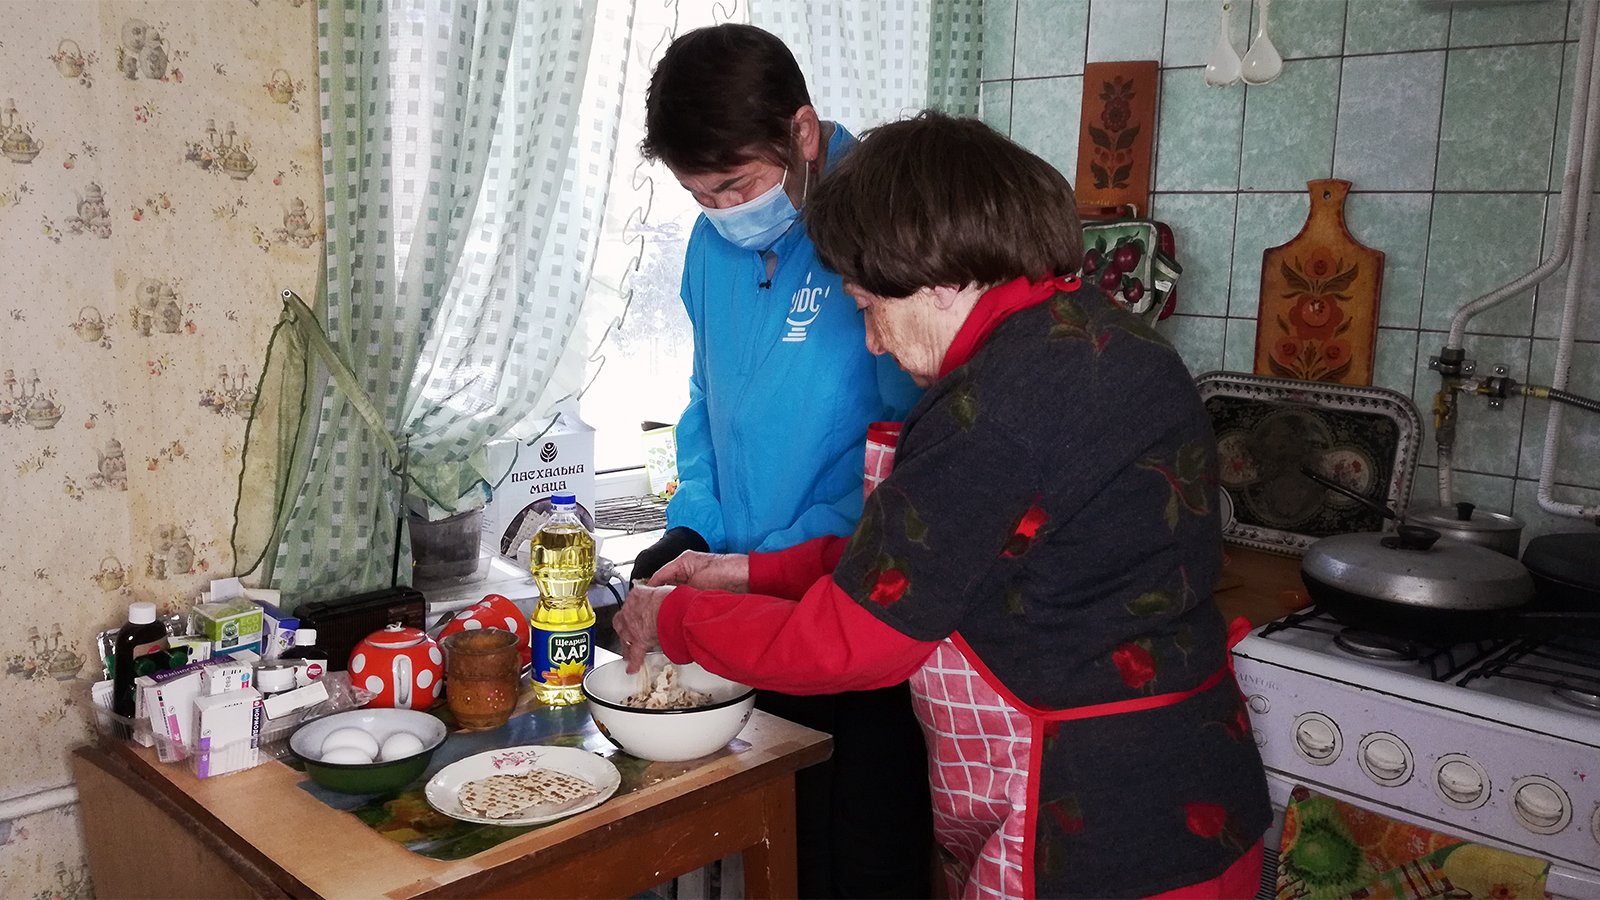 Nina Belitskaya, right, teaches a local Jewish volunteer who delivered a matzah box how to make matzah brei, a fried egg/matzah dish very popular among Ashkenazi Jews on Passover, in 2021. Photo courtesy of JDC